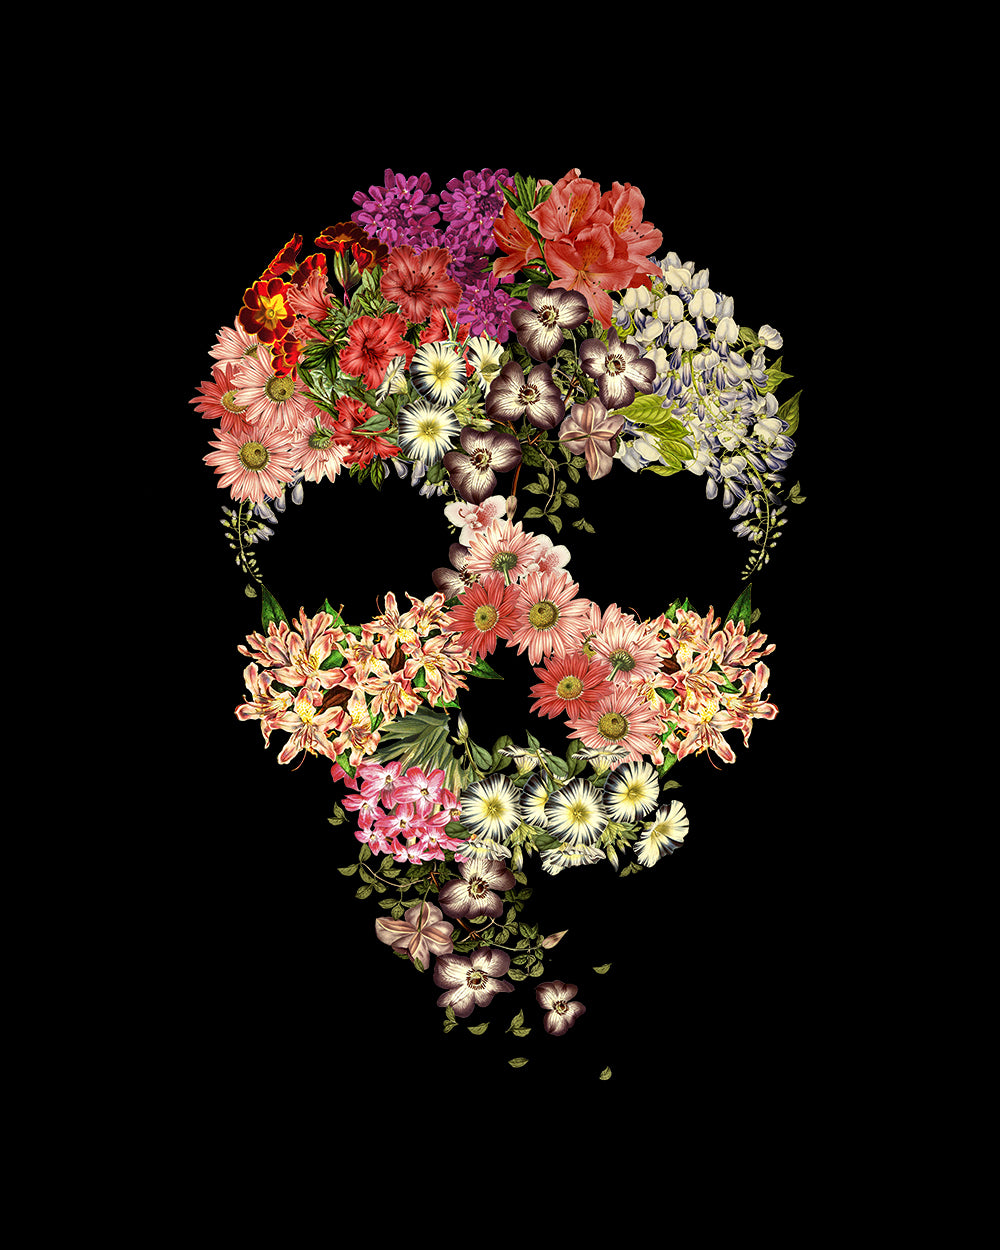 Skull Floral Decay T-Shirt Australia Online #colour_black